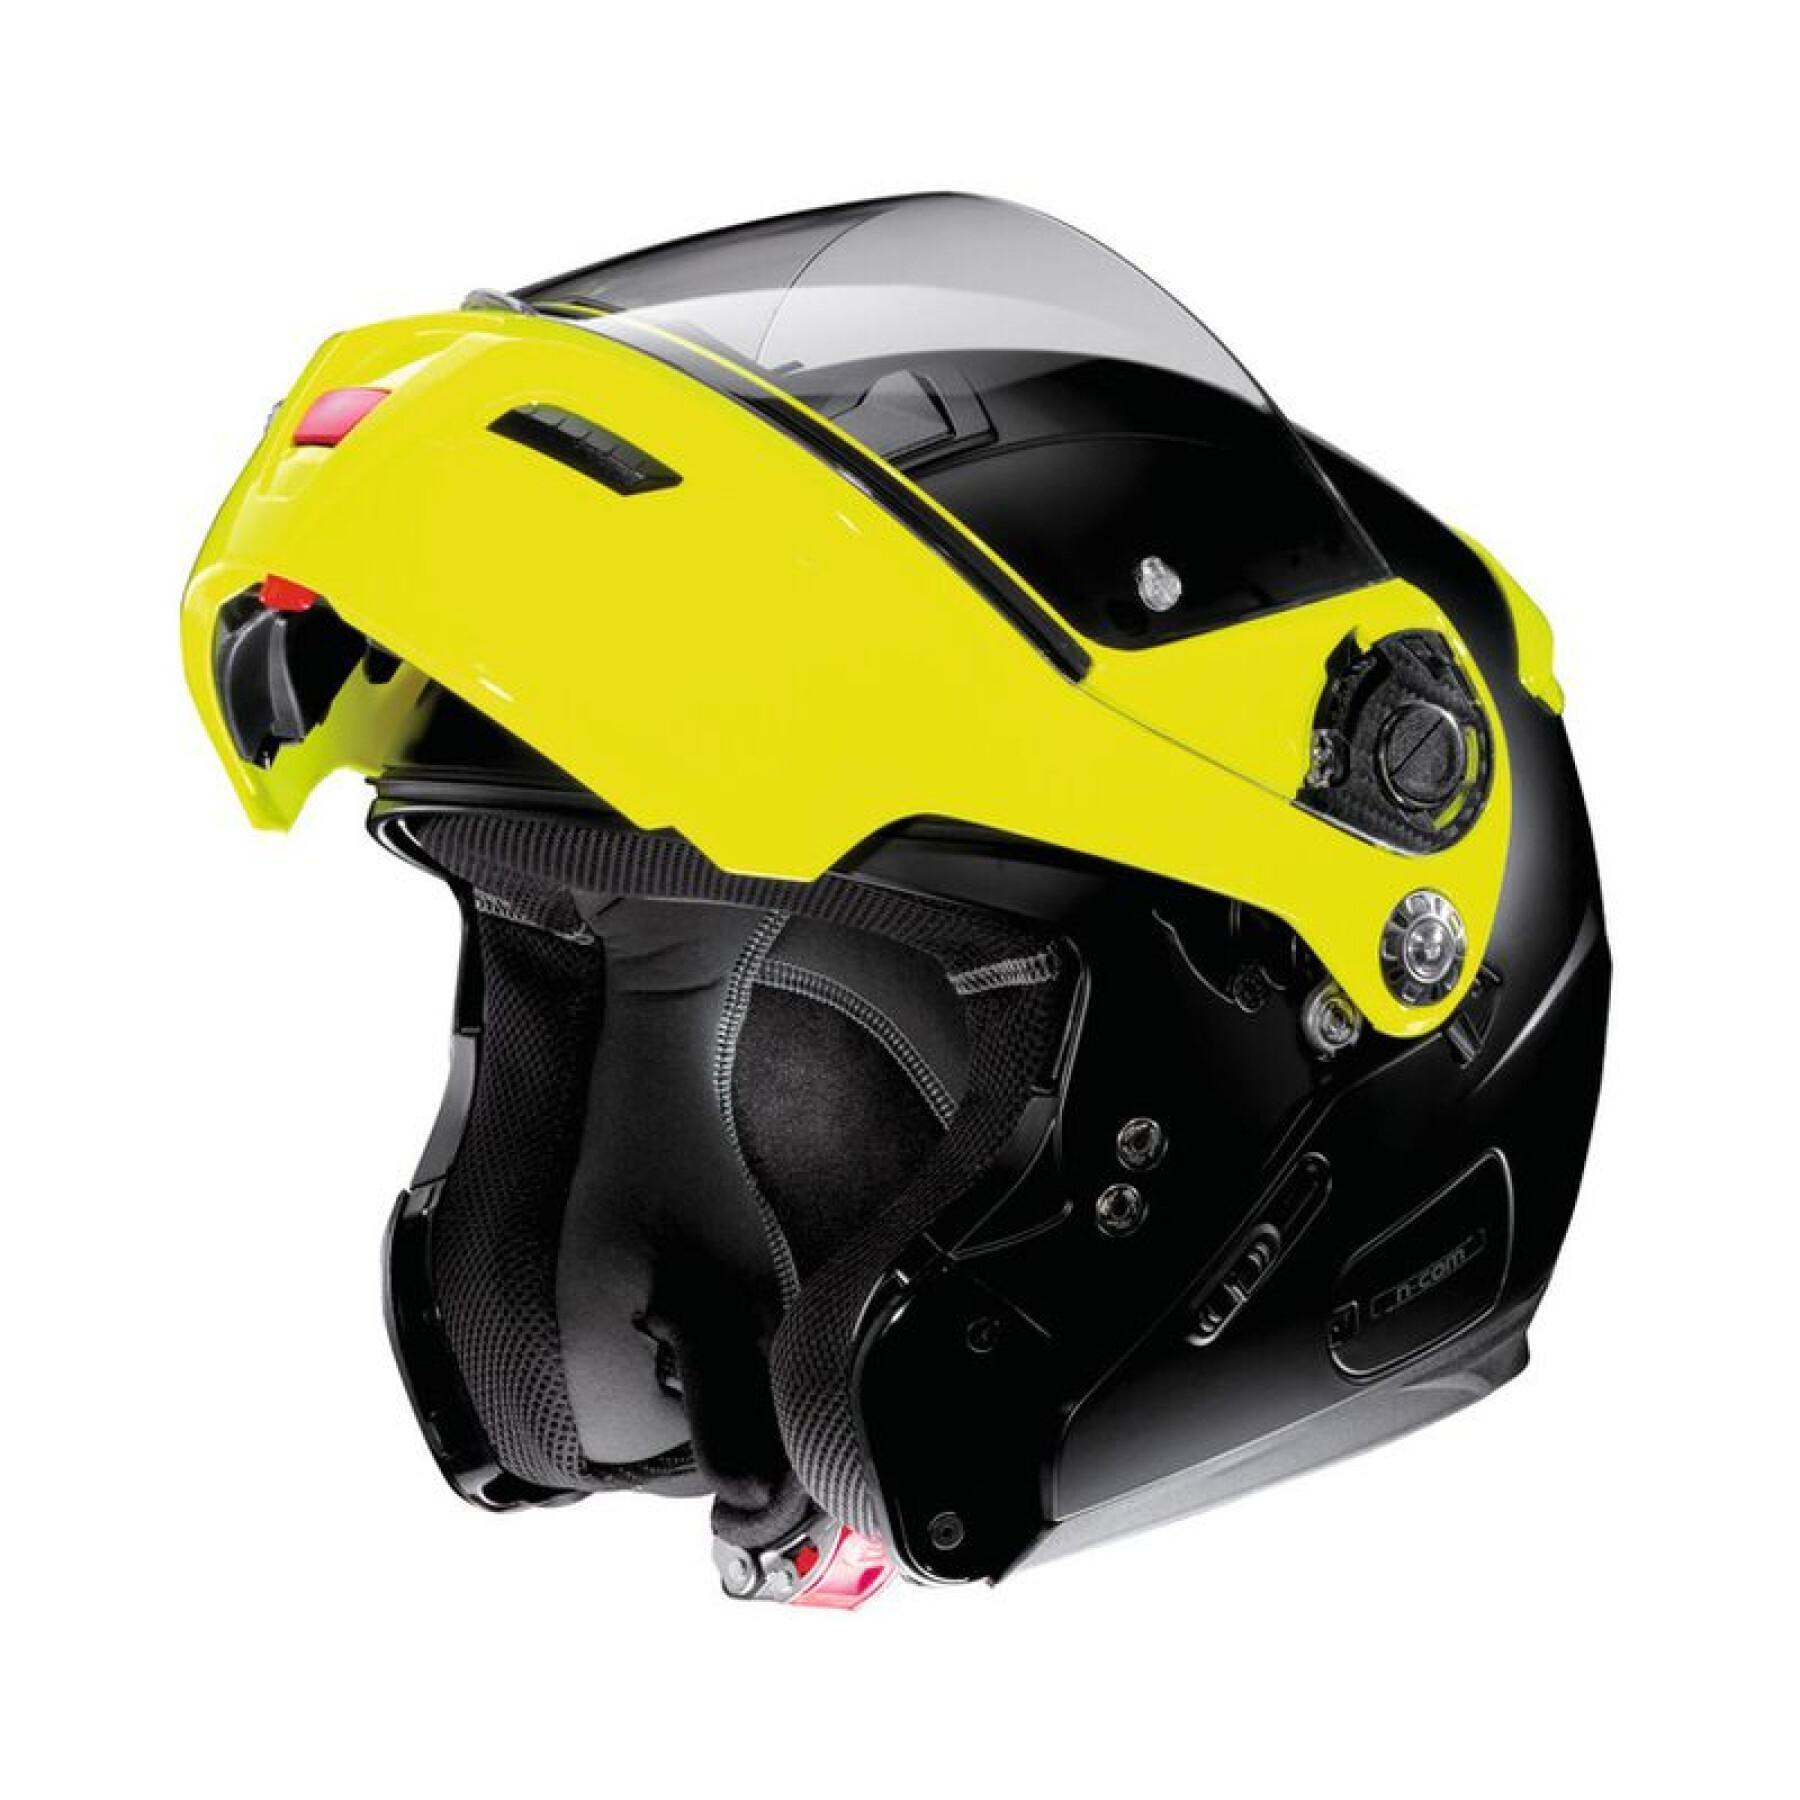 Modulär motorcykelhjälm Grex G9.1 Evolve N-Com Flat 31